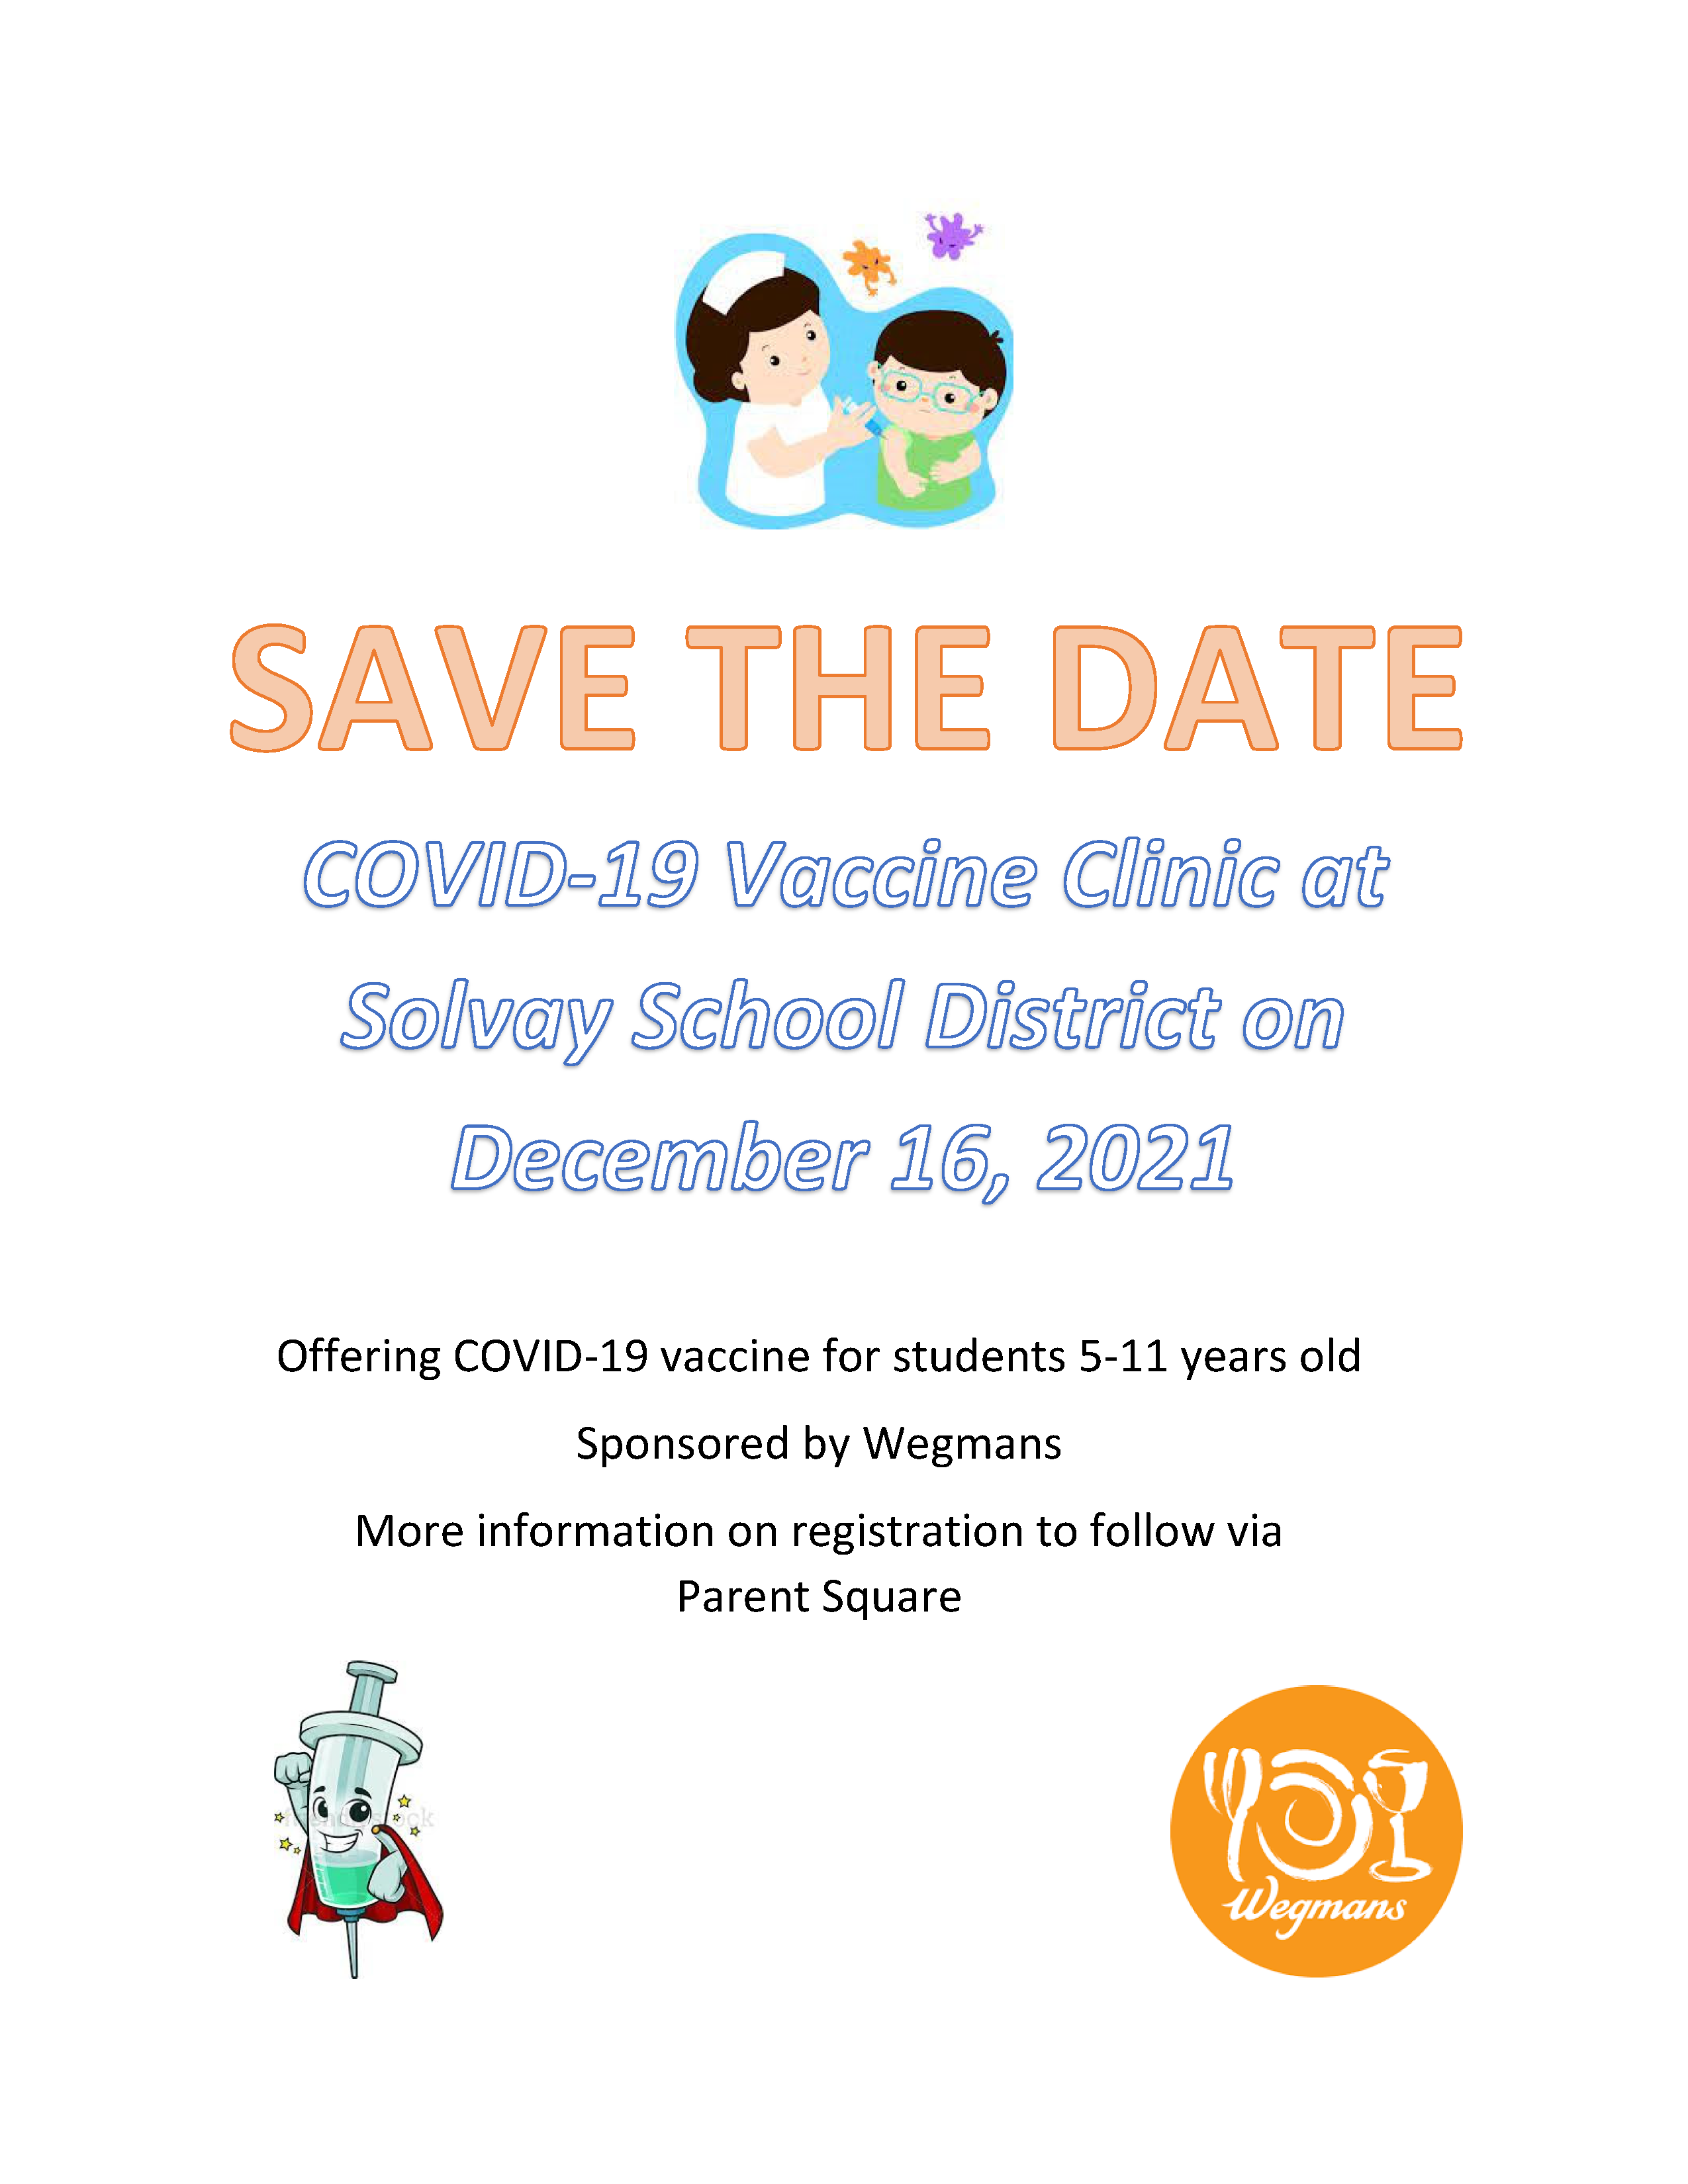 www.solvayschools.org/tfiles/folder2081/COVID%20vaccine%20clinic%20flyer.pdf